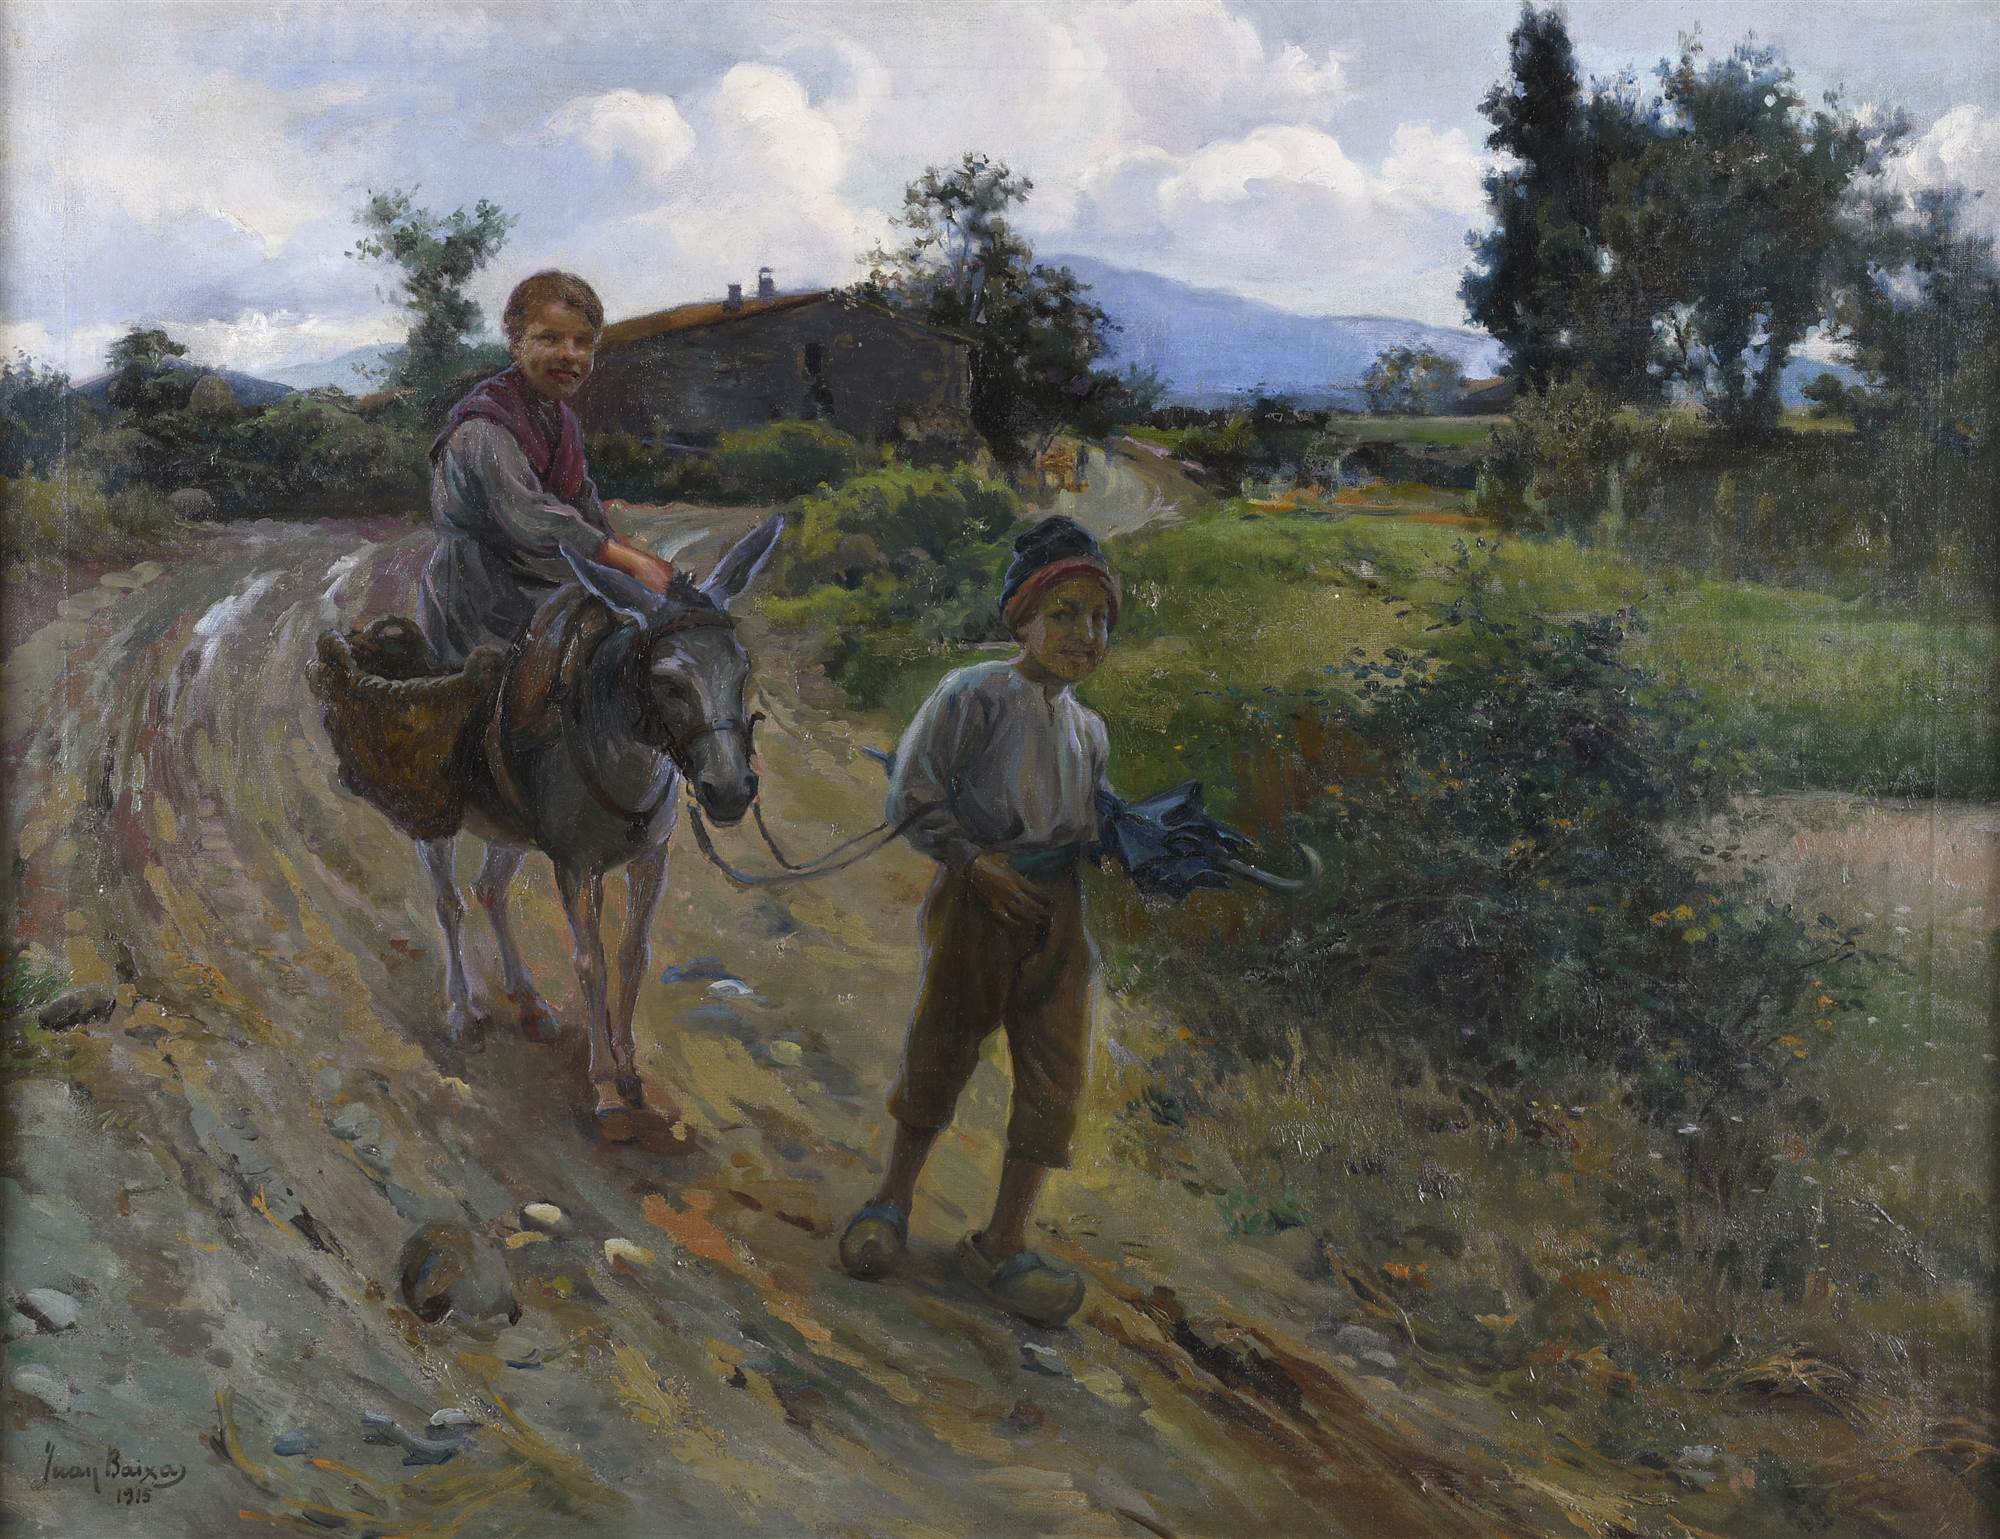 JOAN BAIXAS I CARRETER (1863-1925). "NIÑOS CON BURRO", 1915.